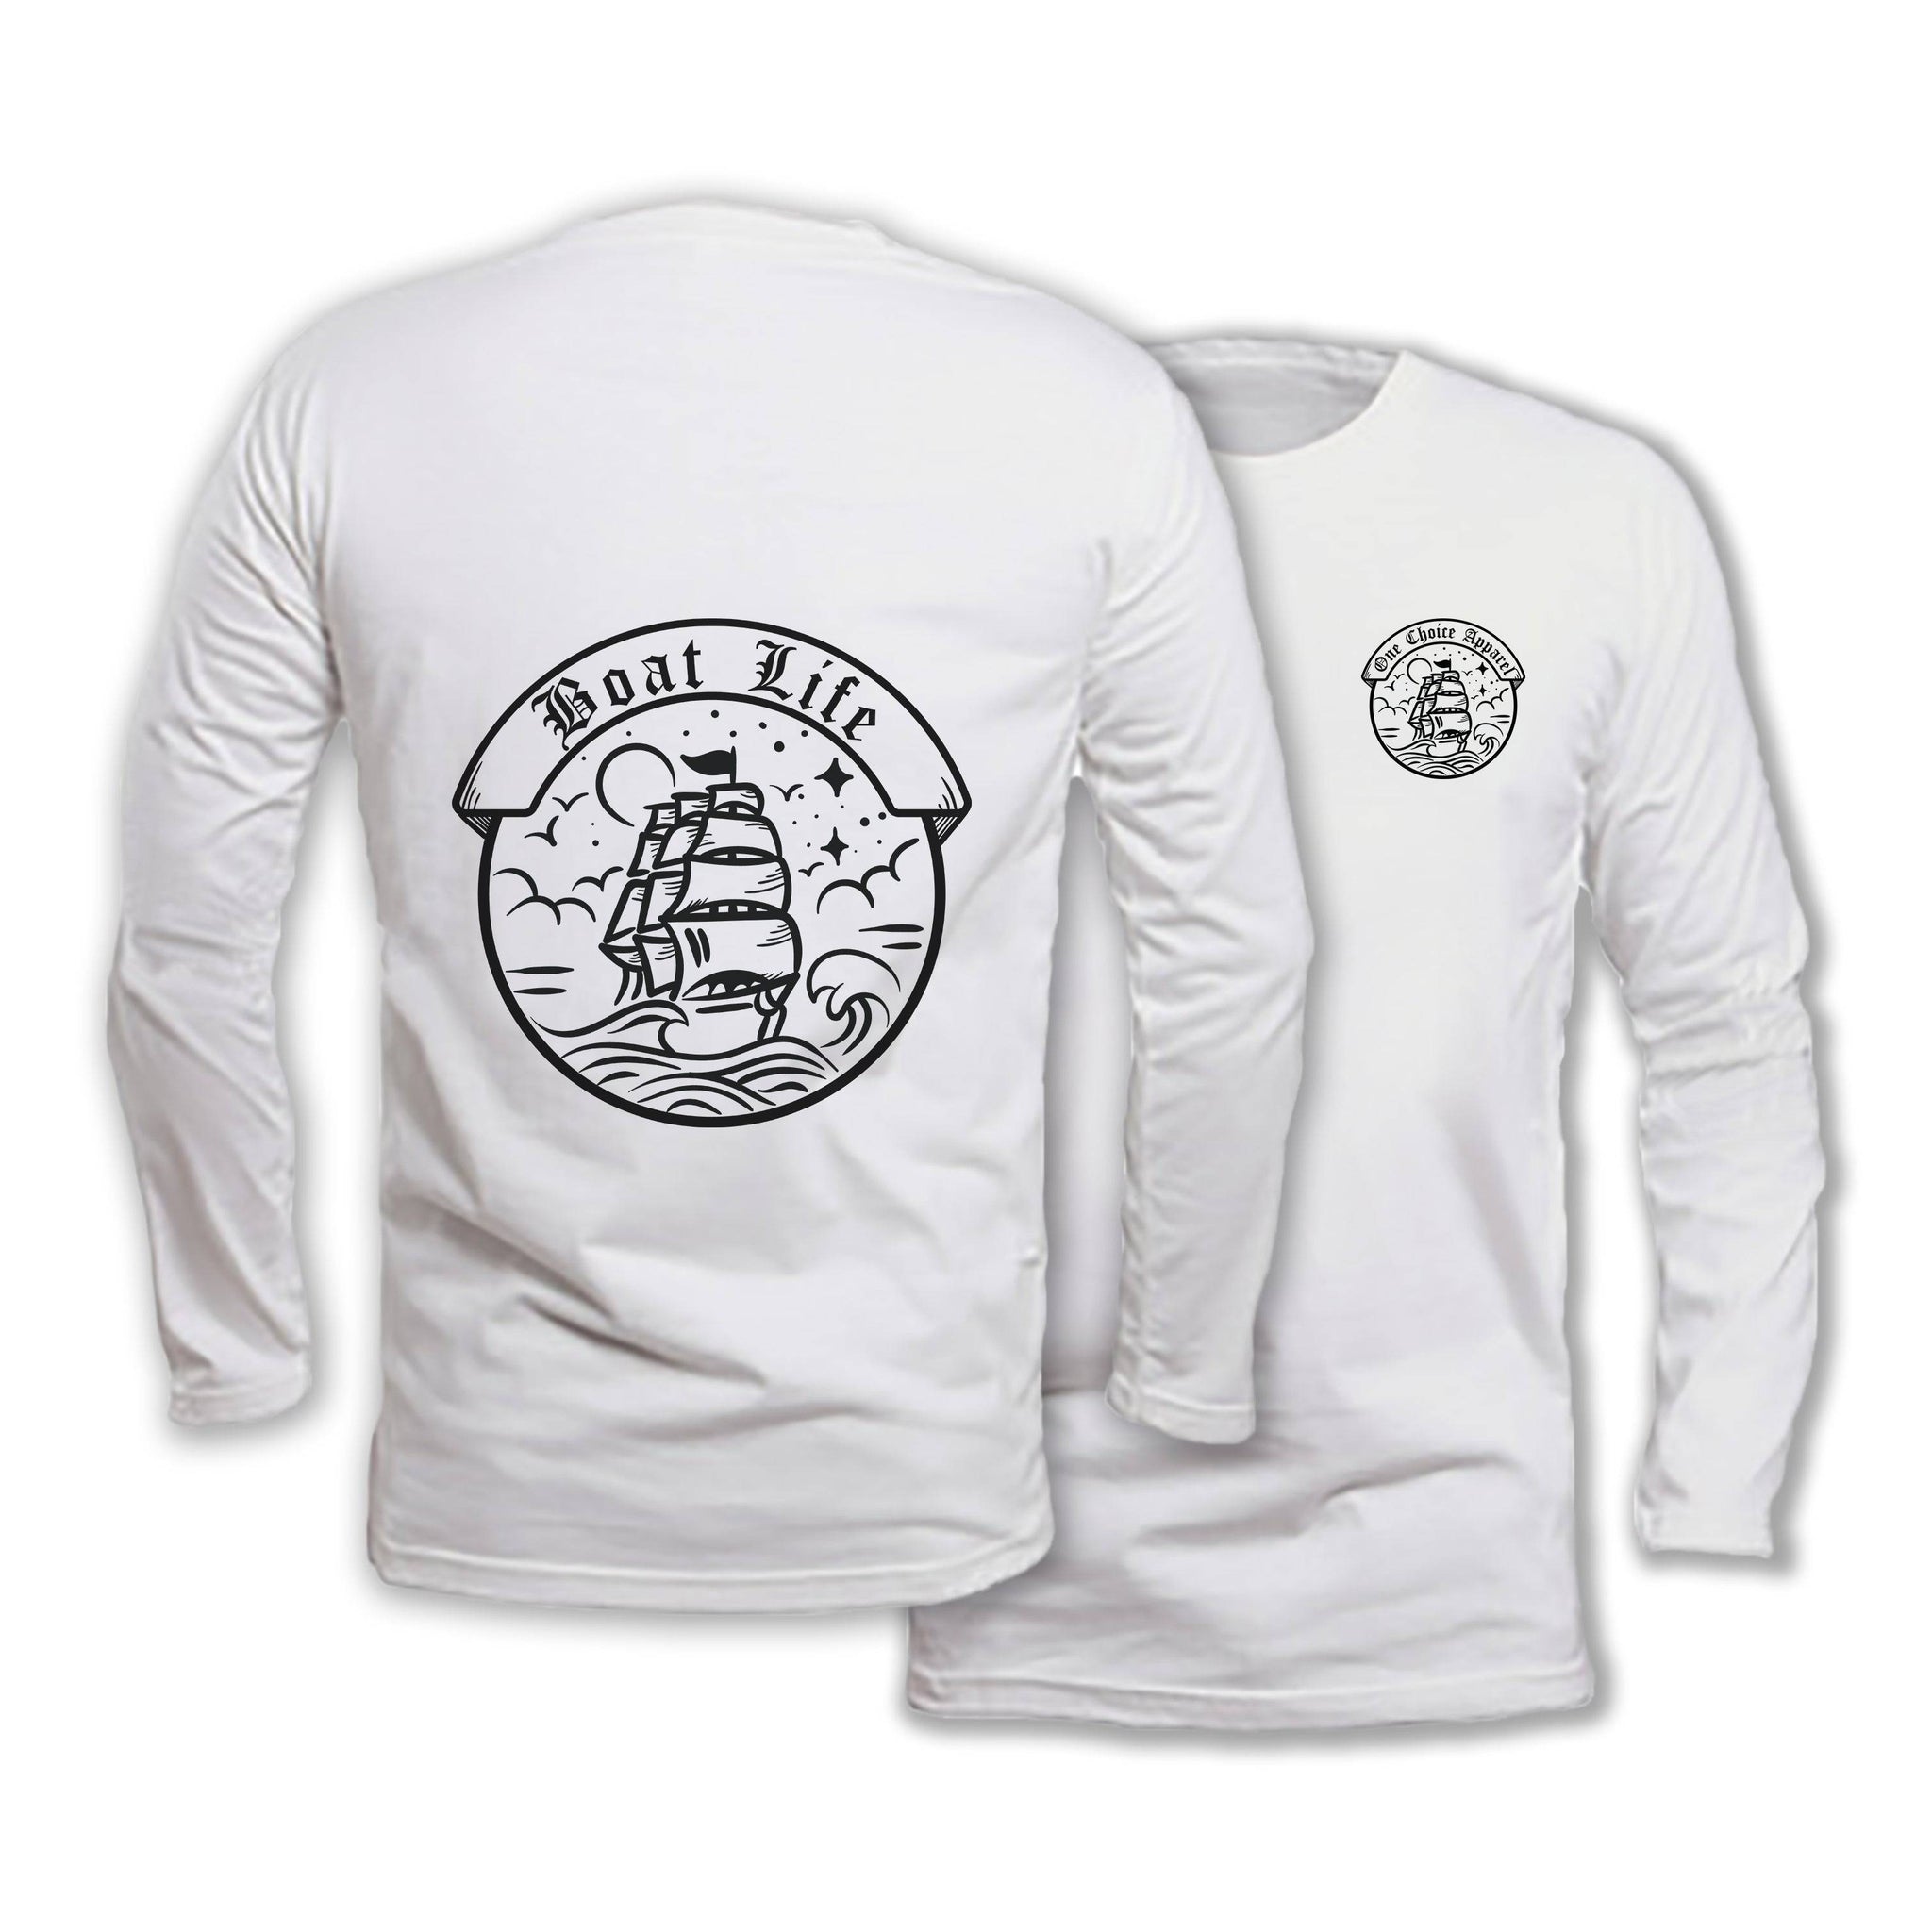 Boat Life - Long Sleeve Organic Cotton T-Shirt - One Choice Apparel